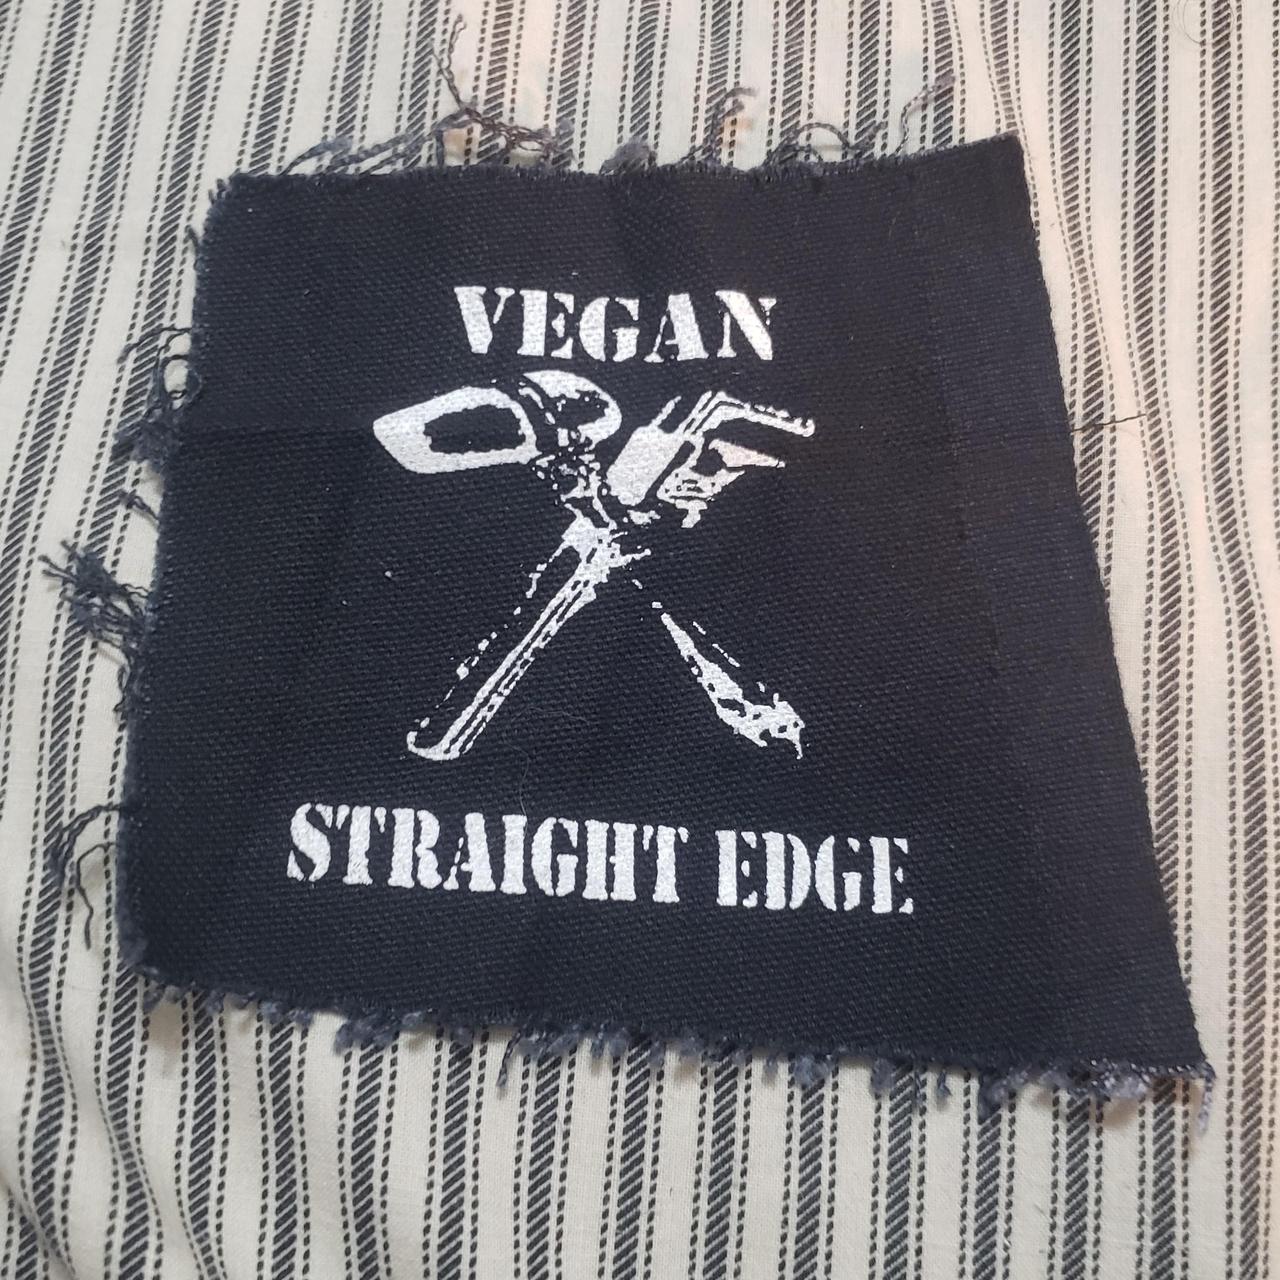 Product Image 1 - Vegan straight edge patch

#vegan #straightedge